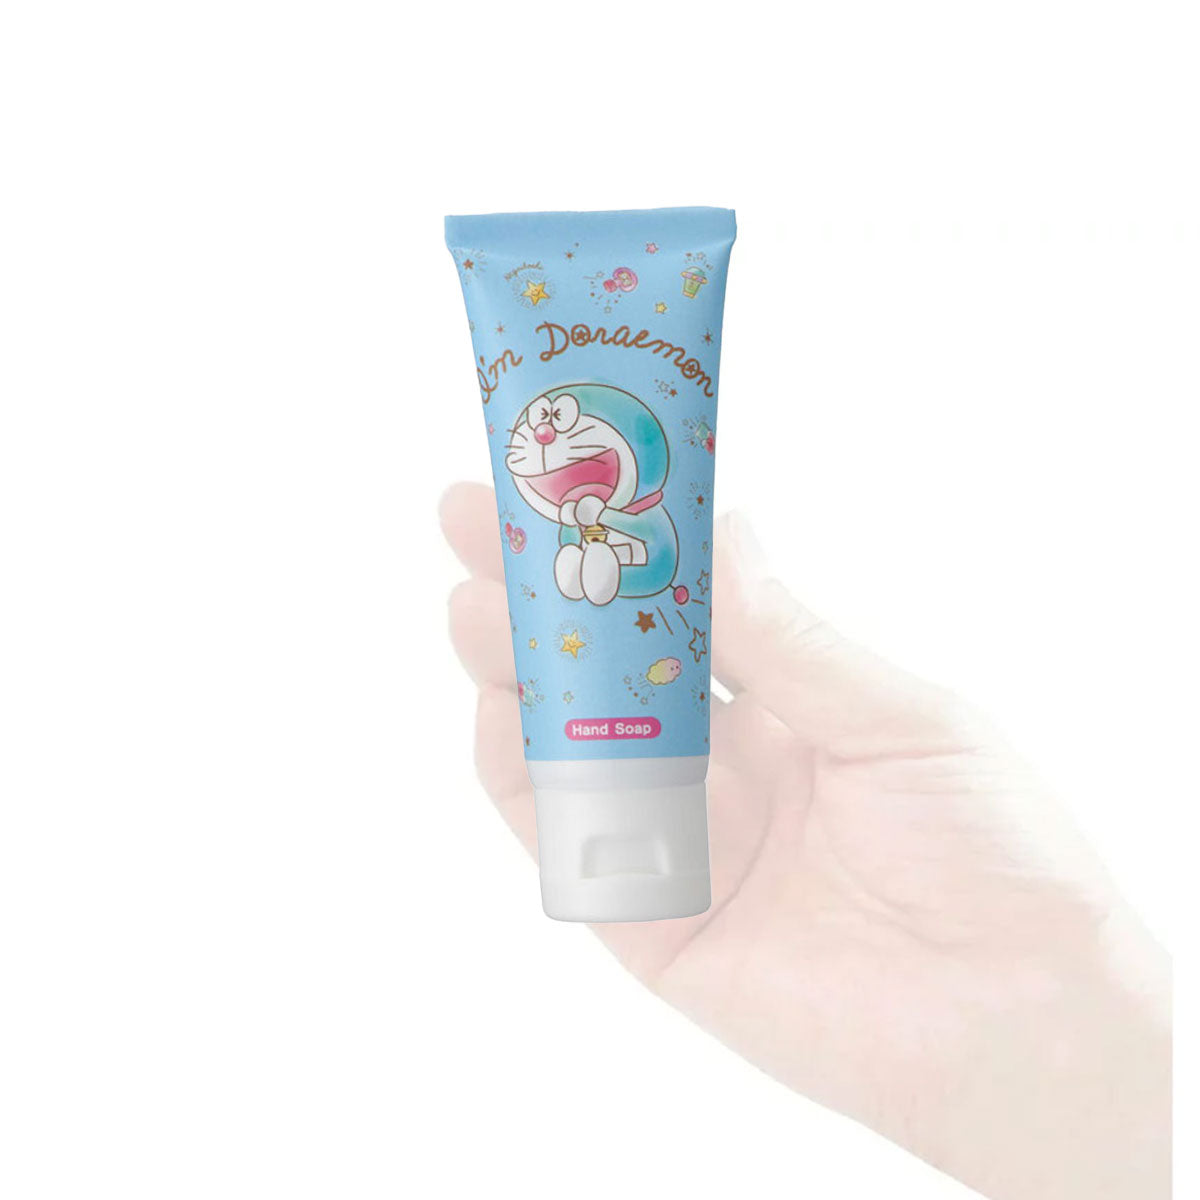 Sanrio Hand Soap #Doraemon